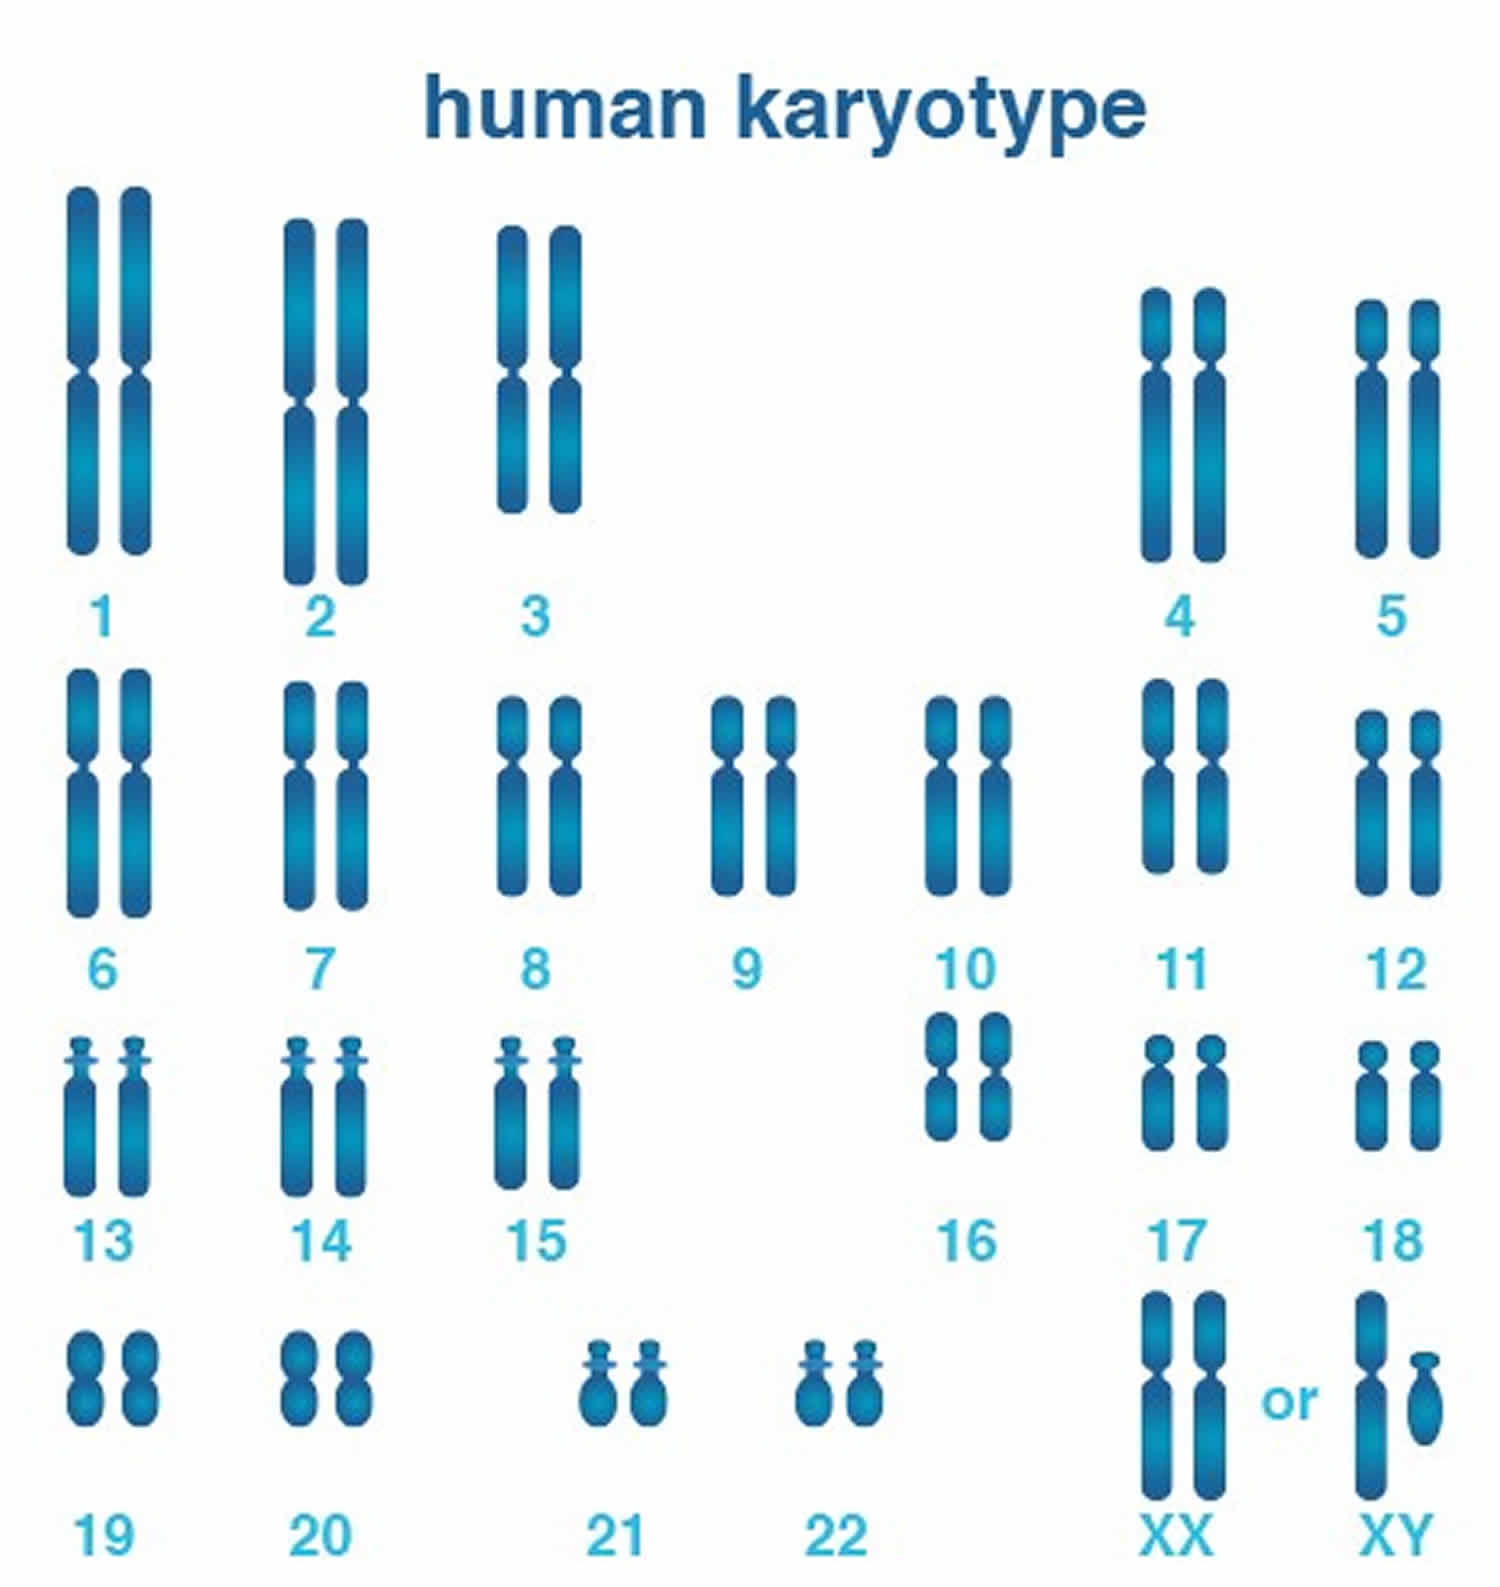 genes that travel on x chromosome